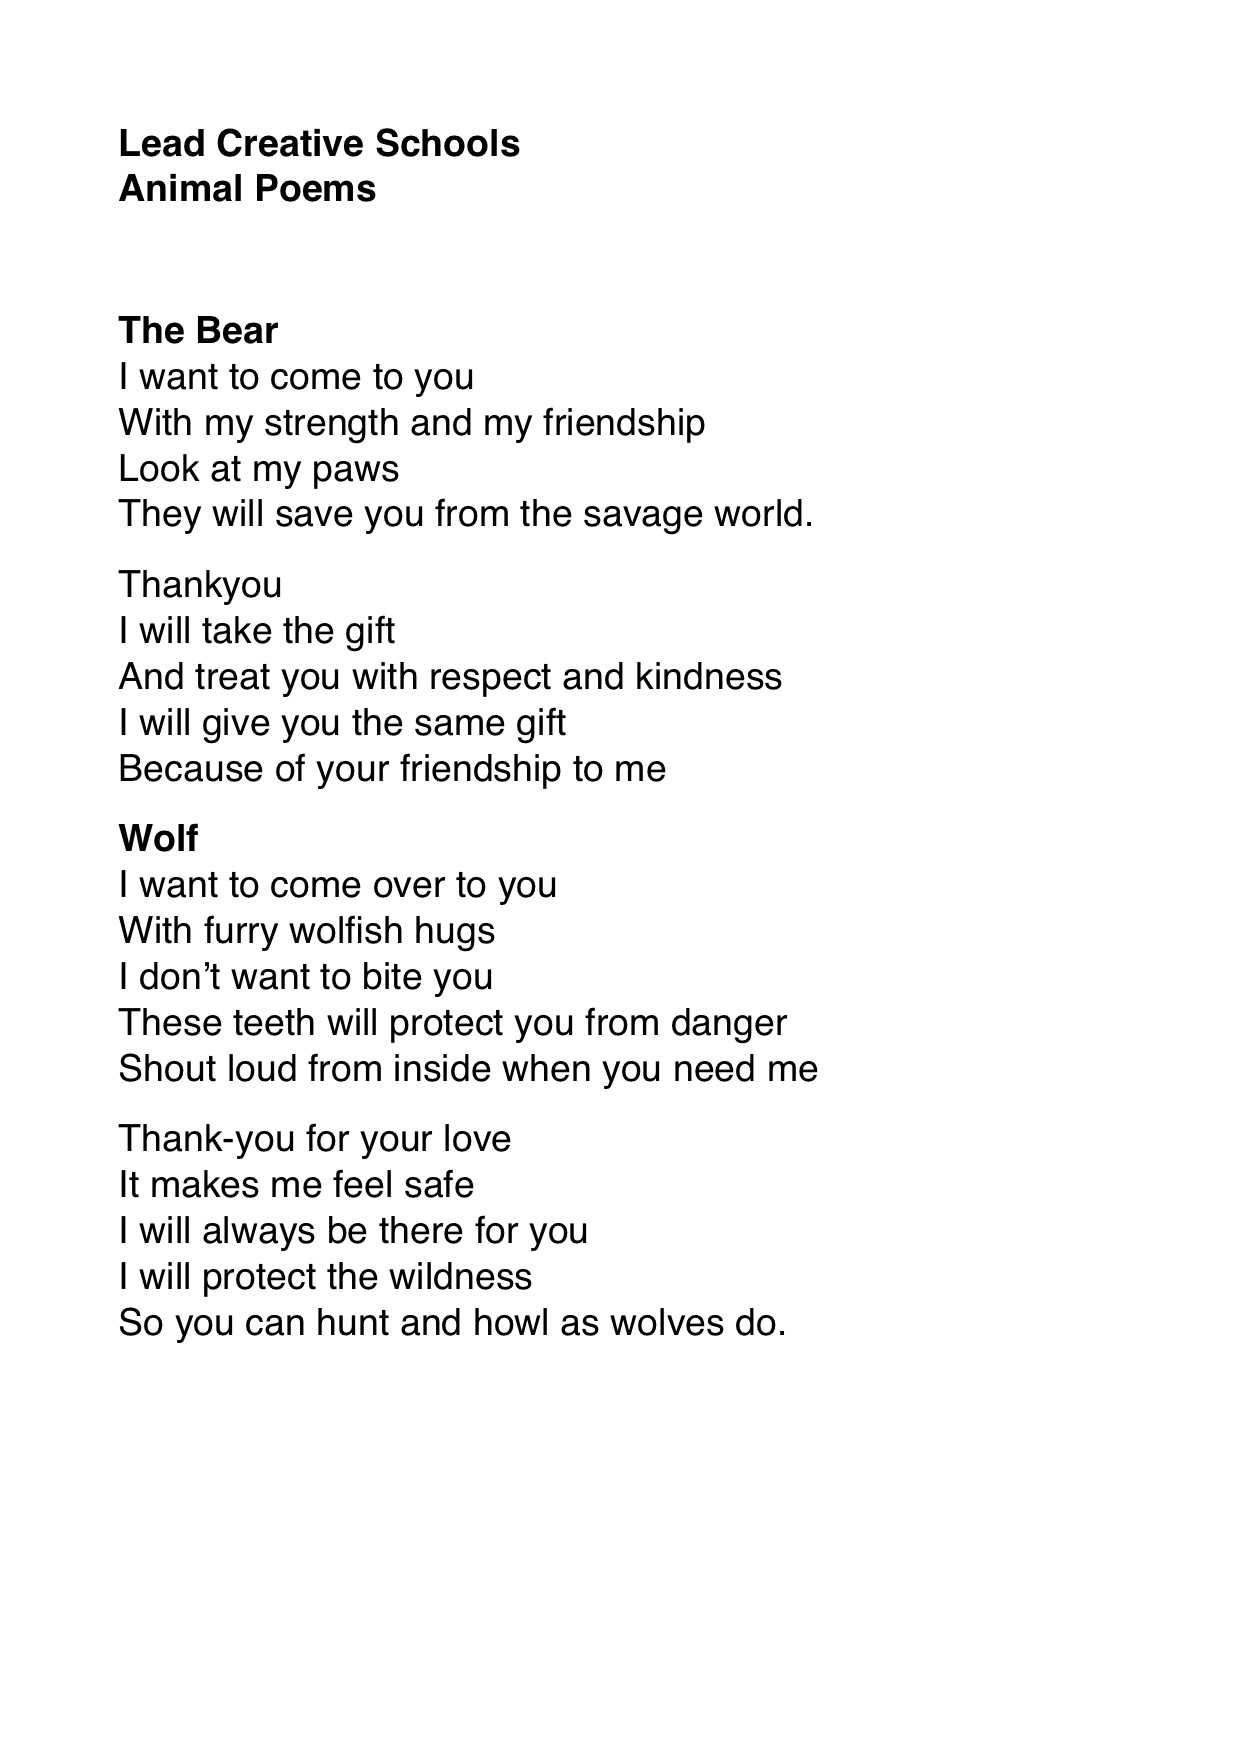 12 Bear and Wolf poems.jpg